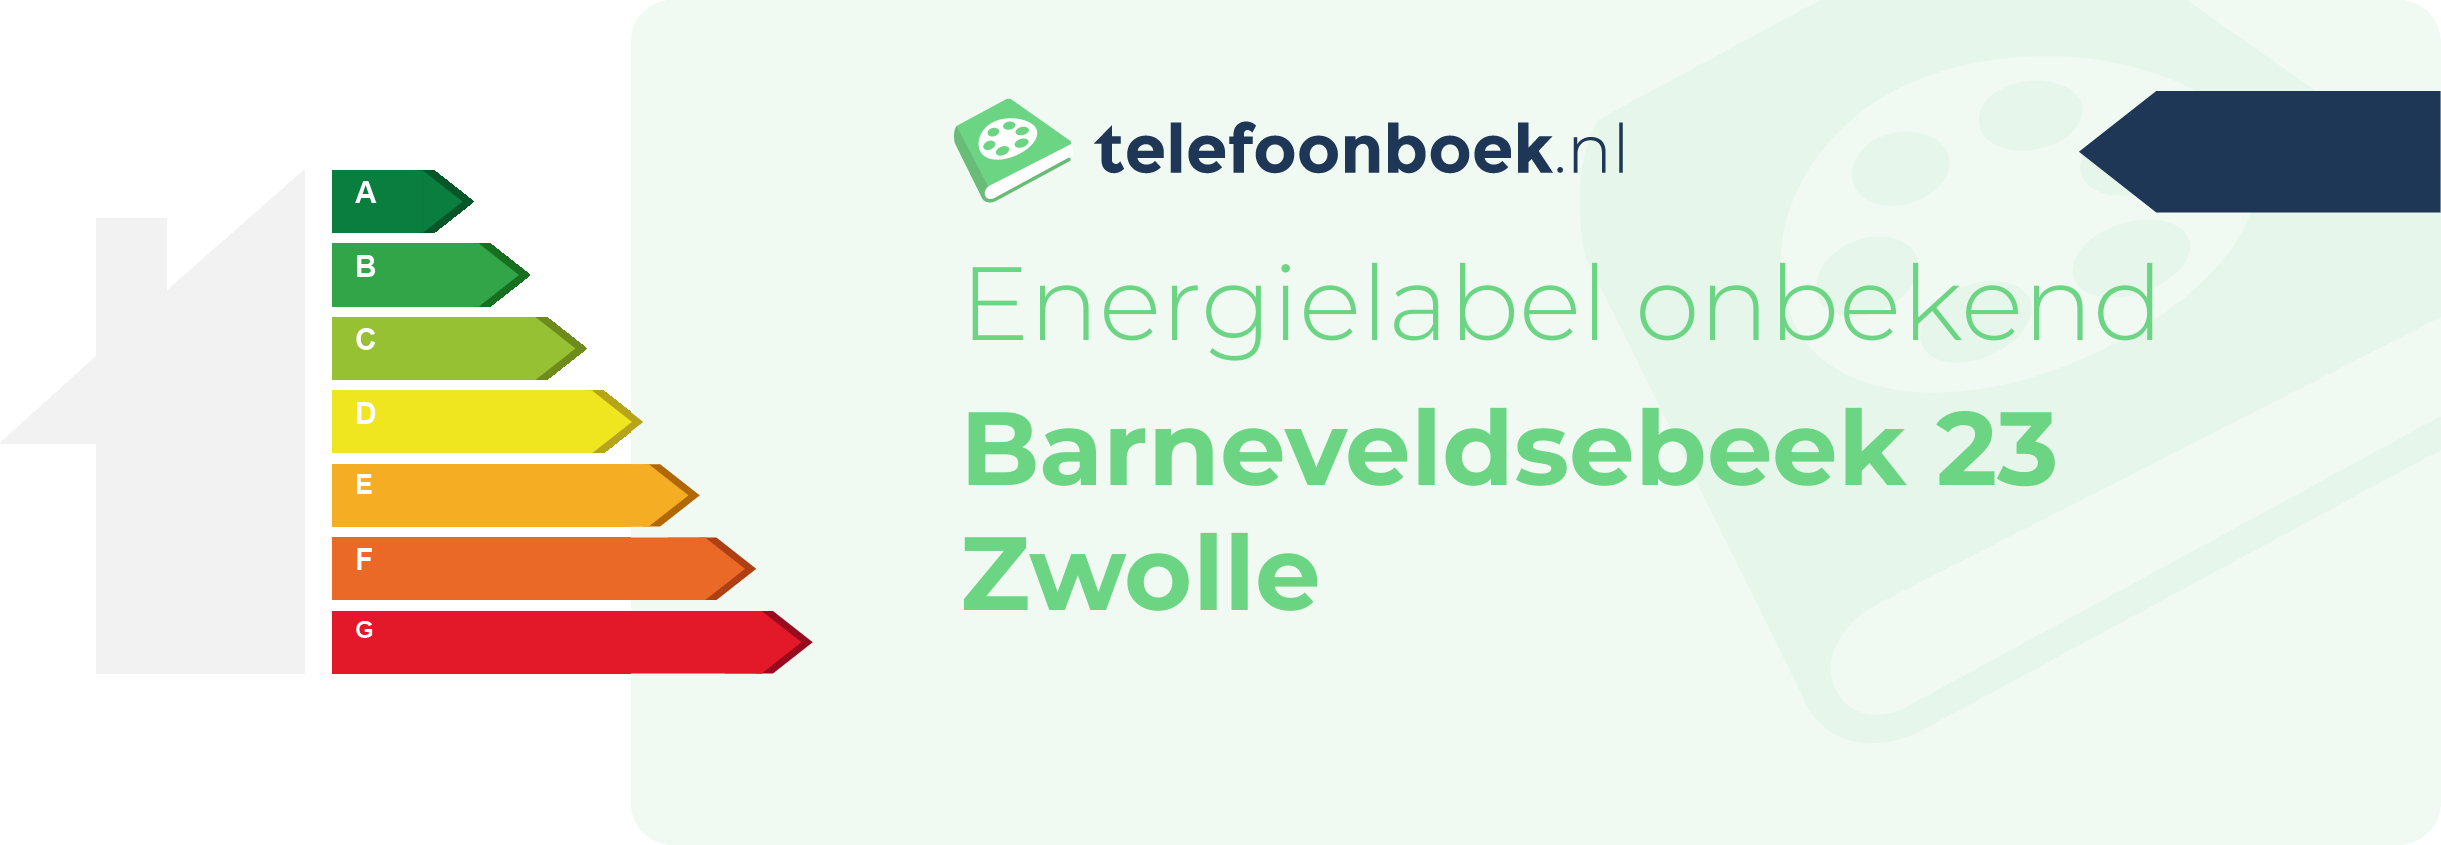 Energielabel Barneveldsebeek 23 Zwolle